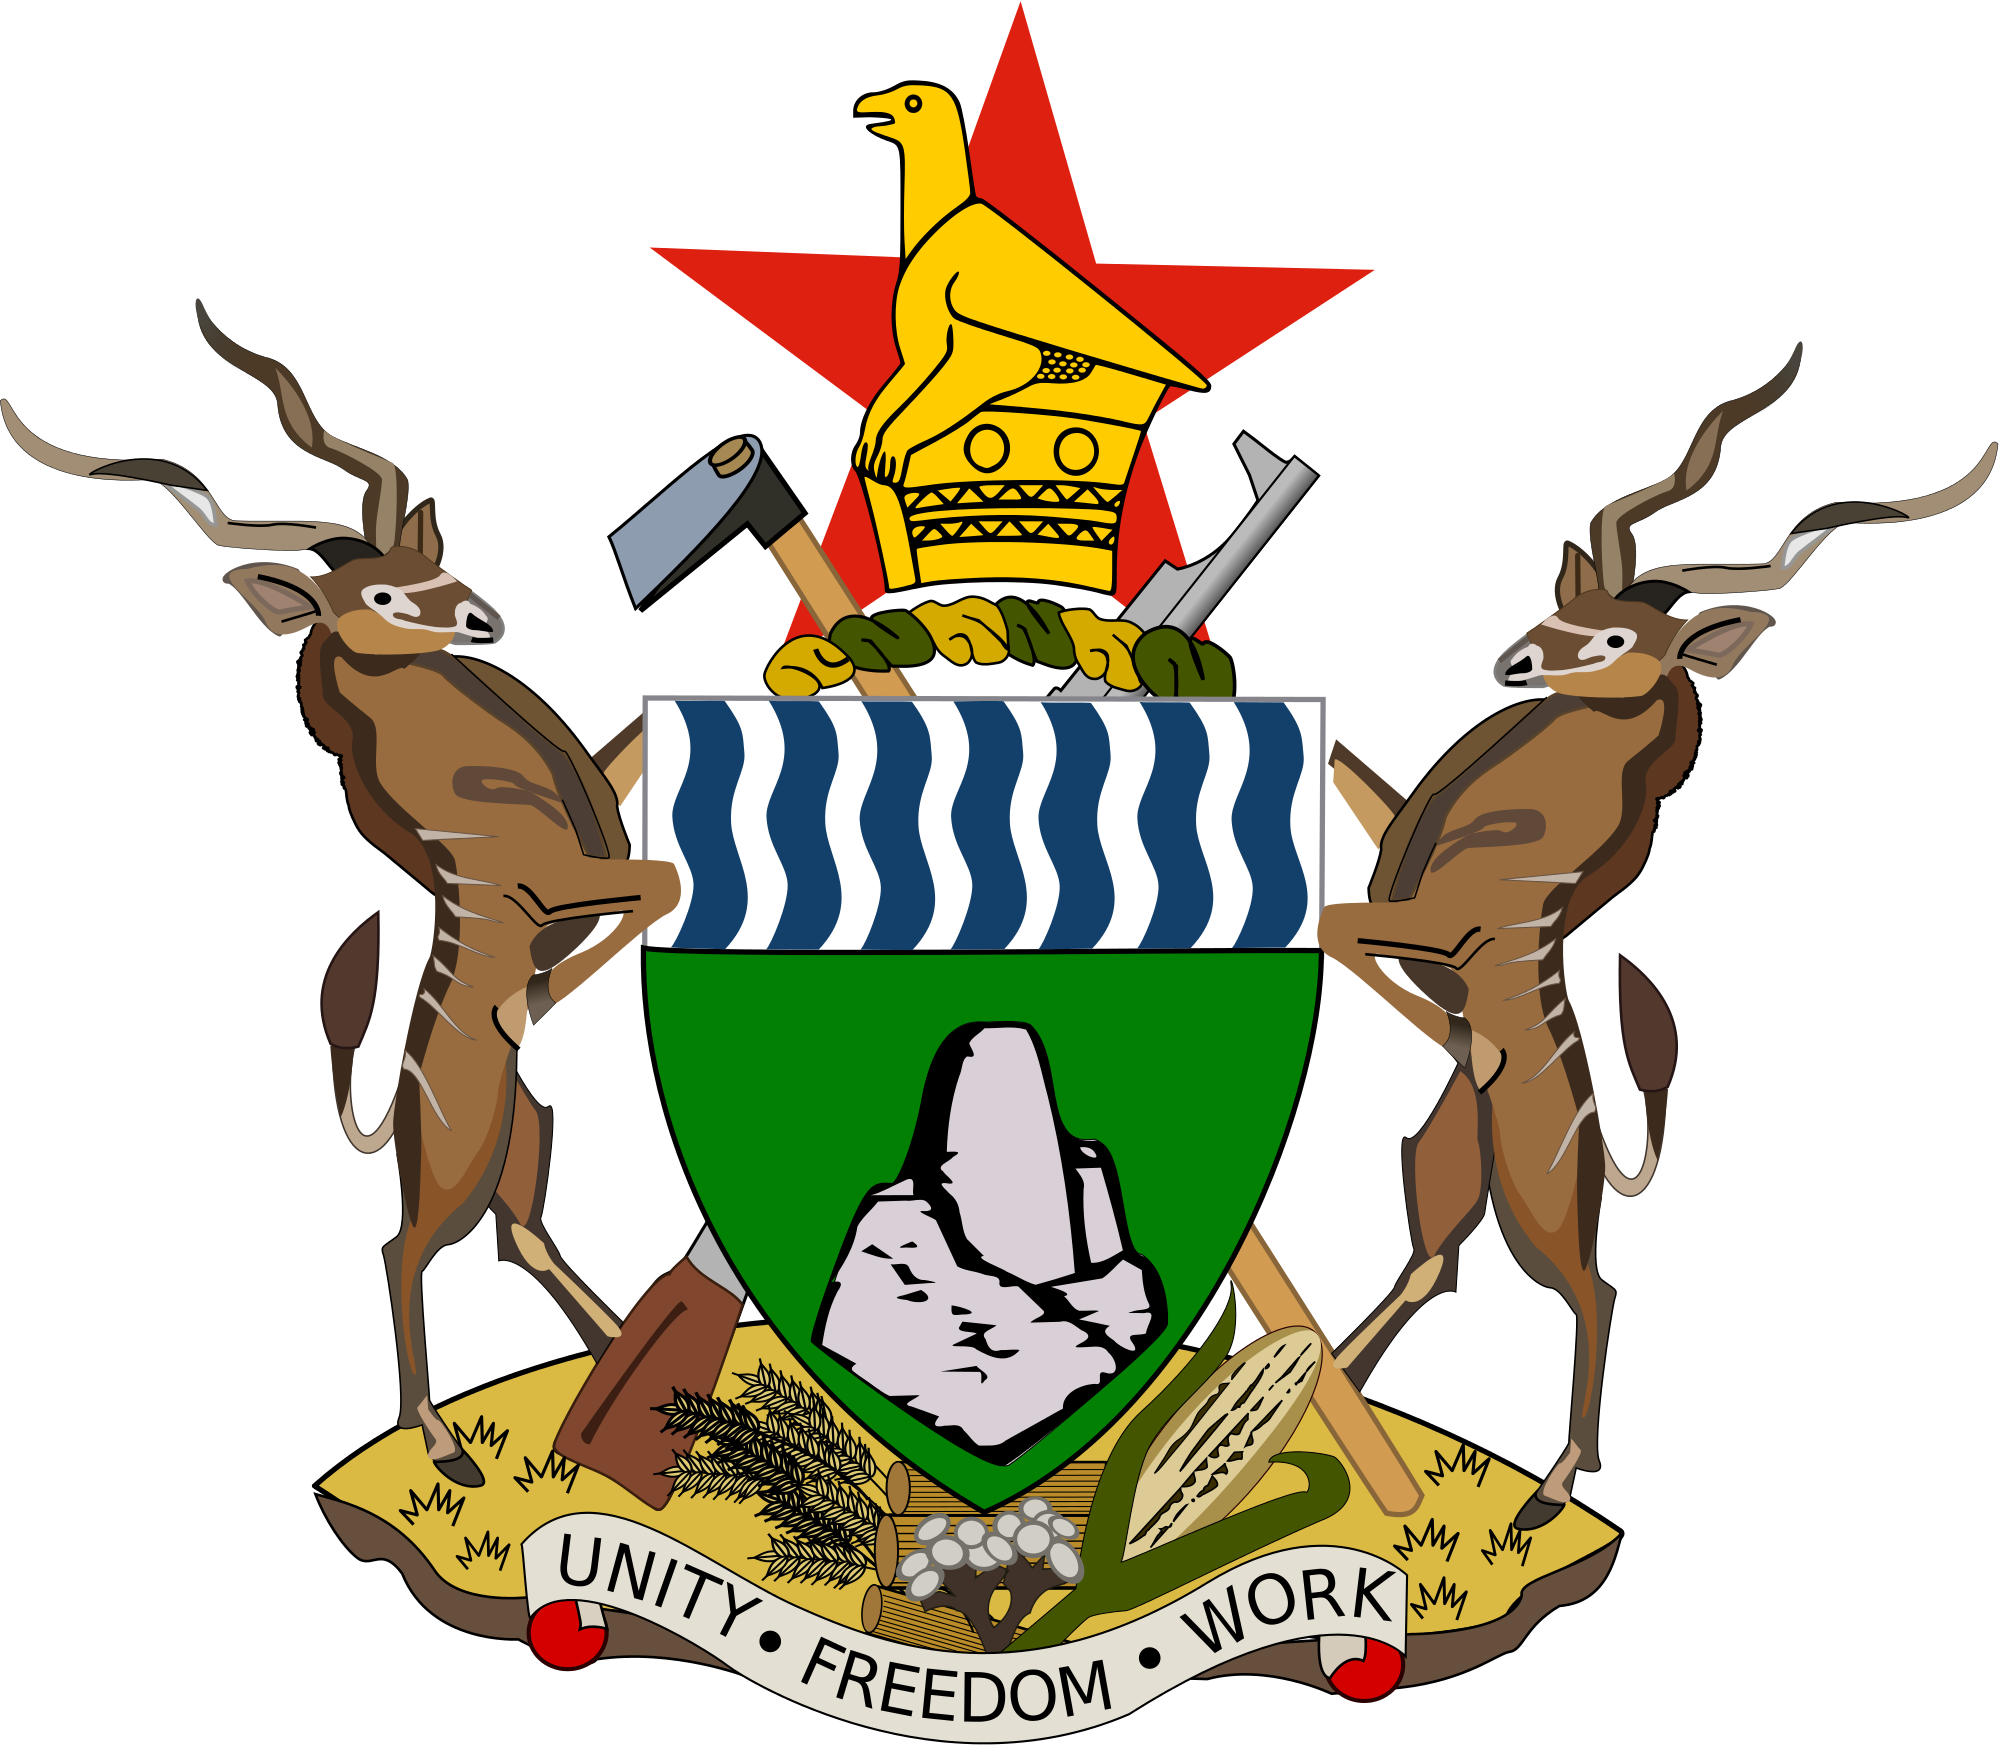 Zimbabwe National Coatof Arms PNG image